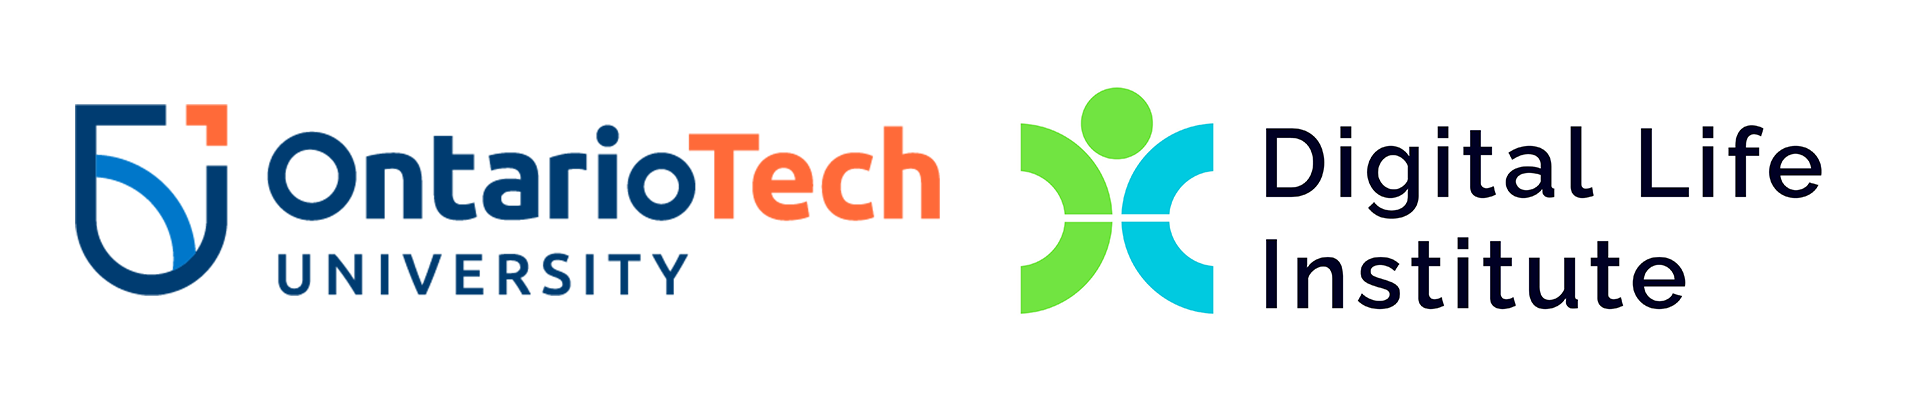 Ontario Tech University logo and Digital Life Institute logo